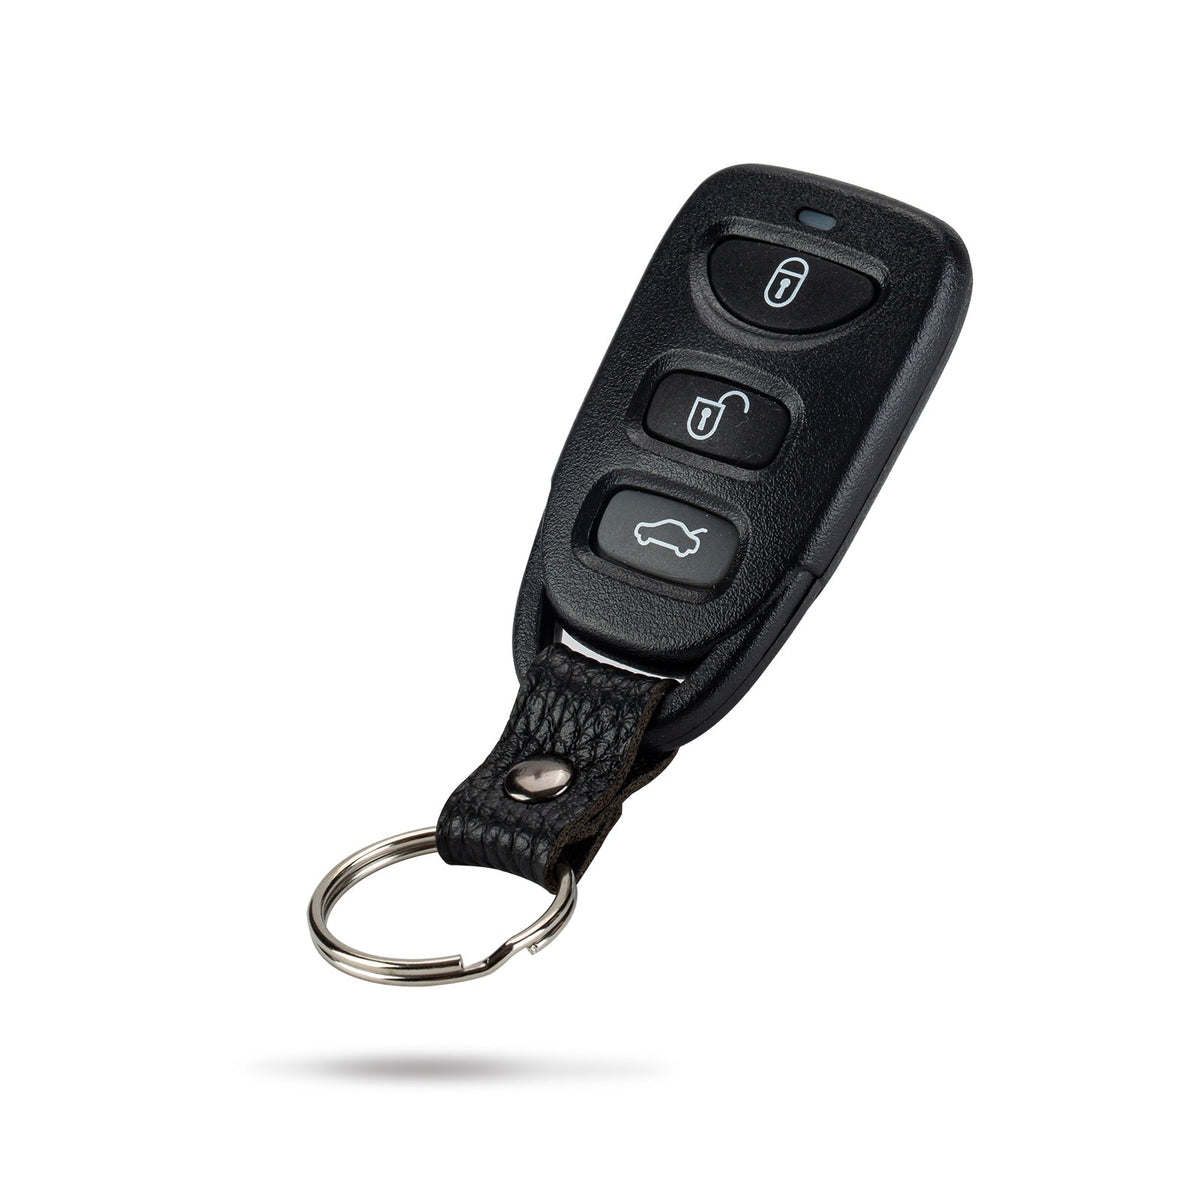 Extra-Partss Remote Car Key Fob Replacement for Hyundai OSLOKA-950T fits 2011 2012 2013 2014 Sonata